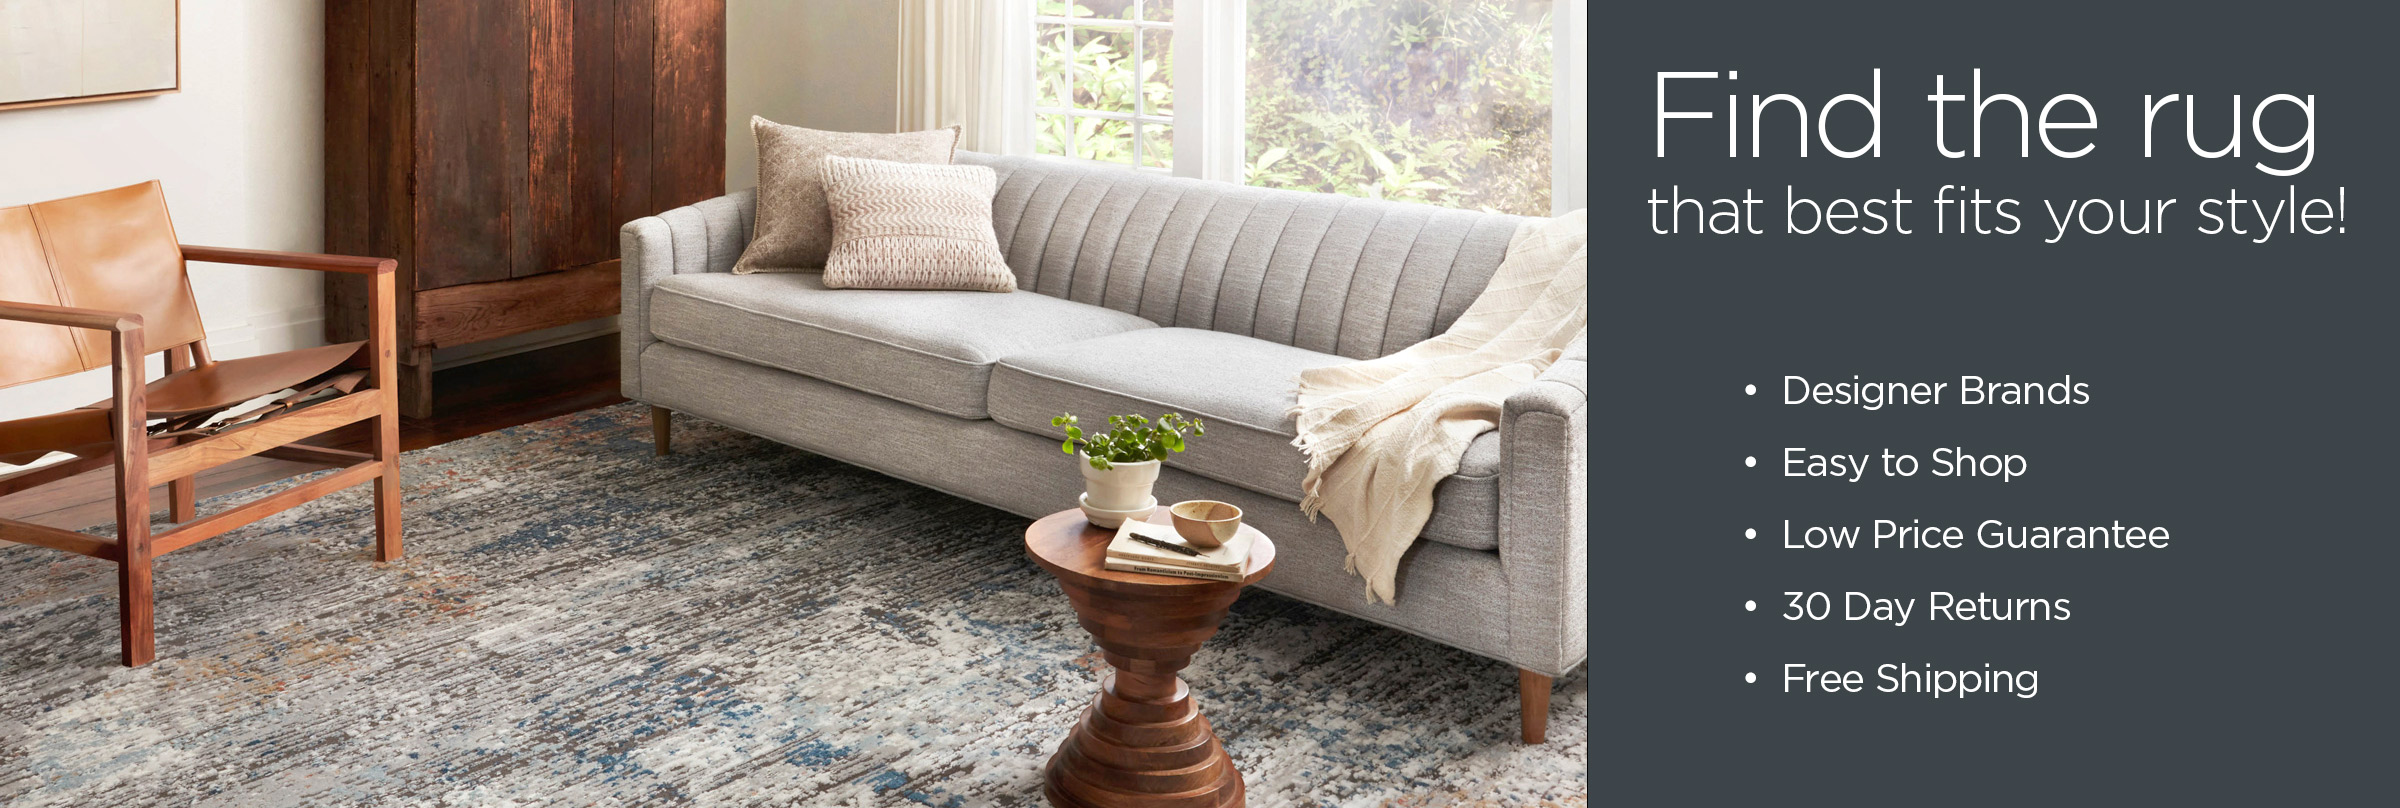 shop Homethreads and save on designer rugs